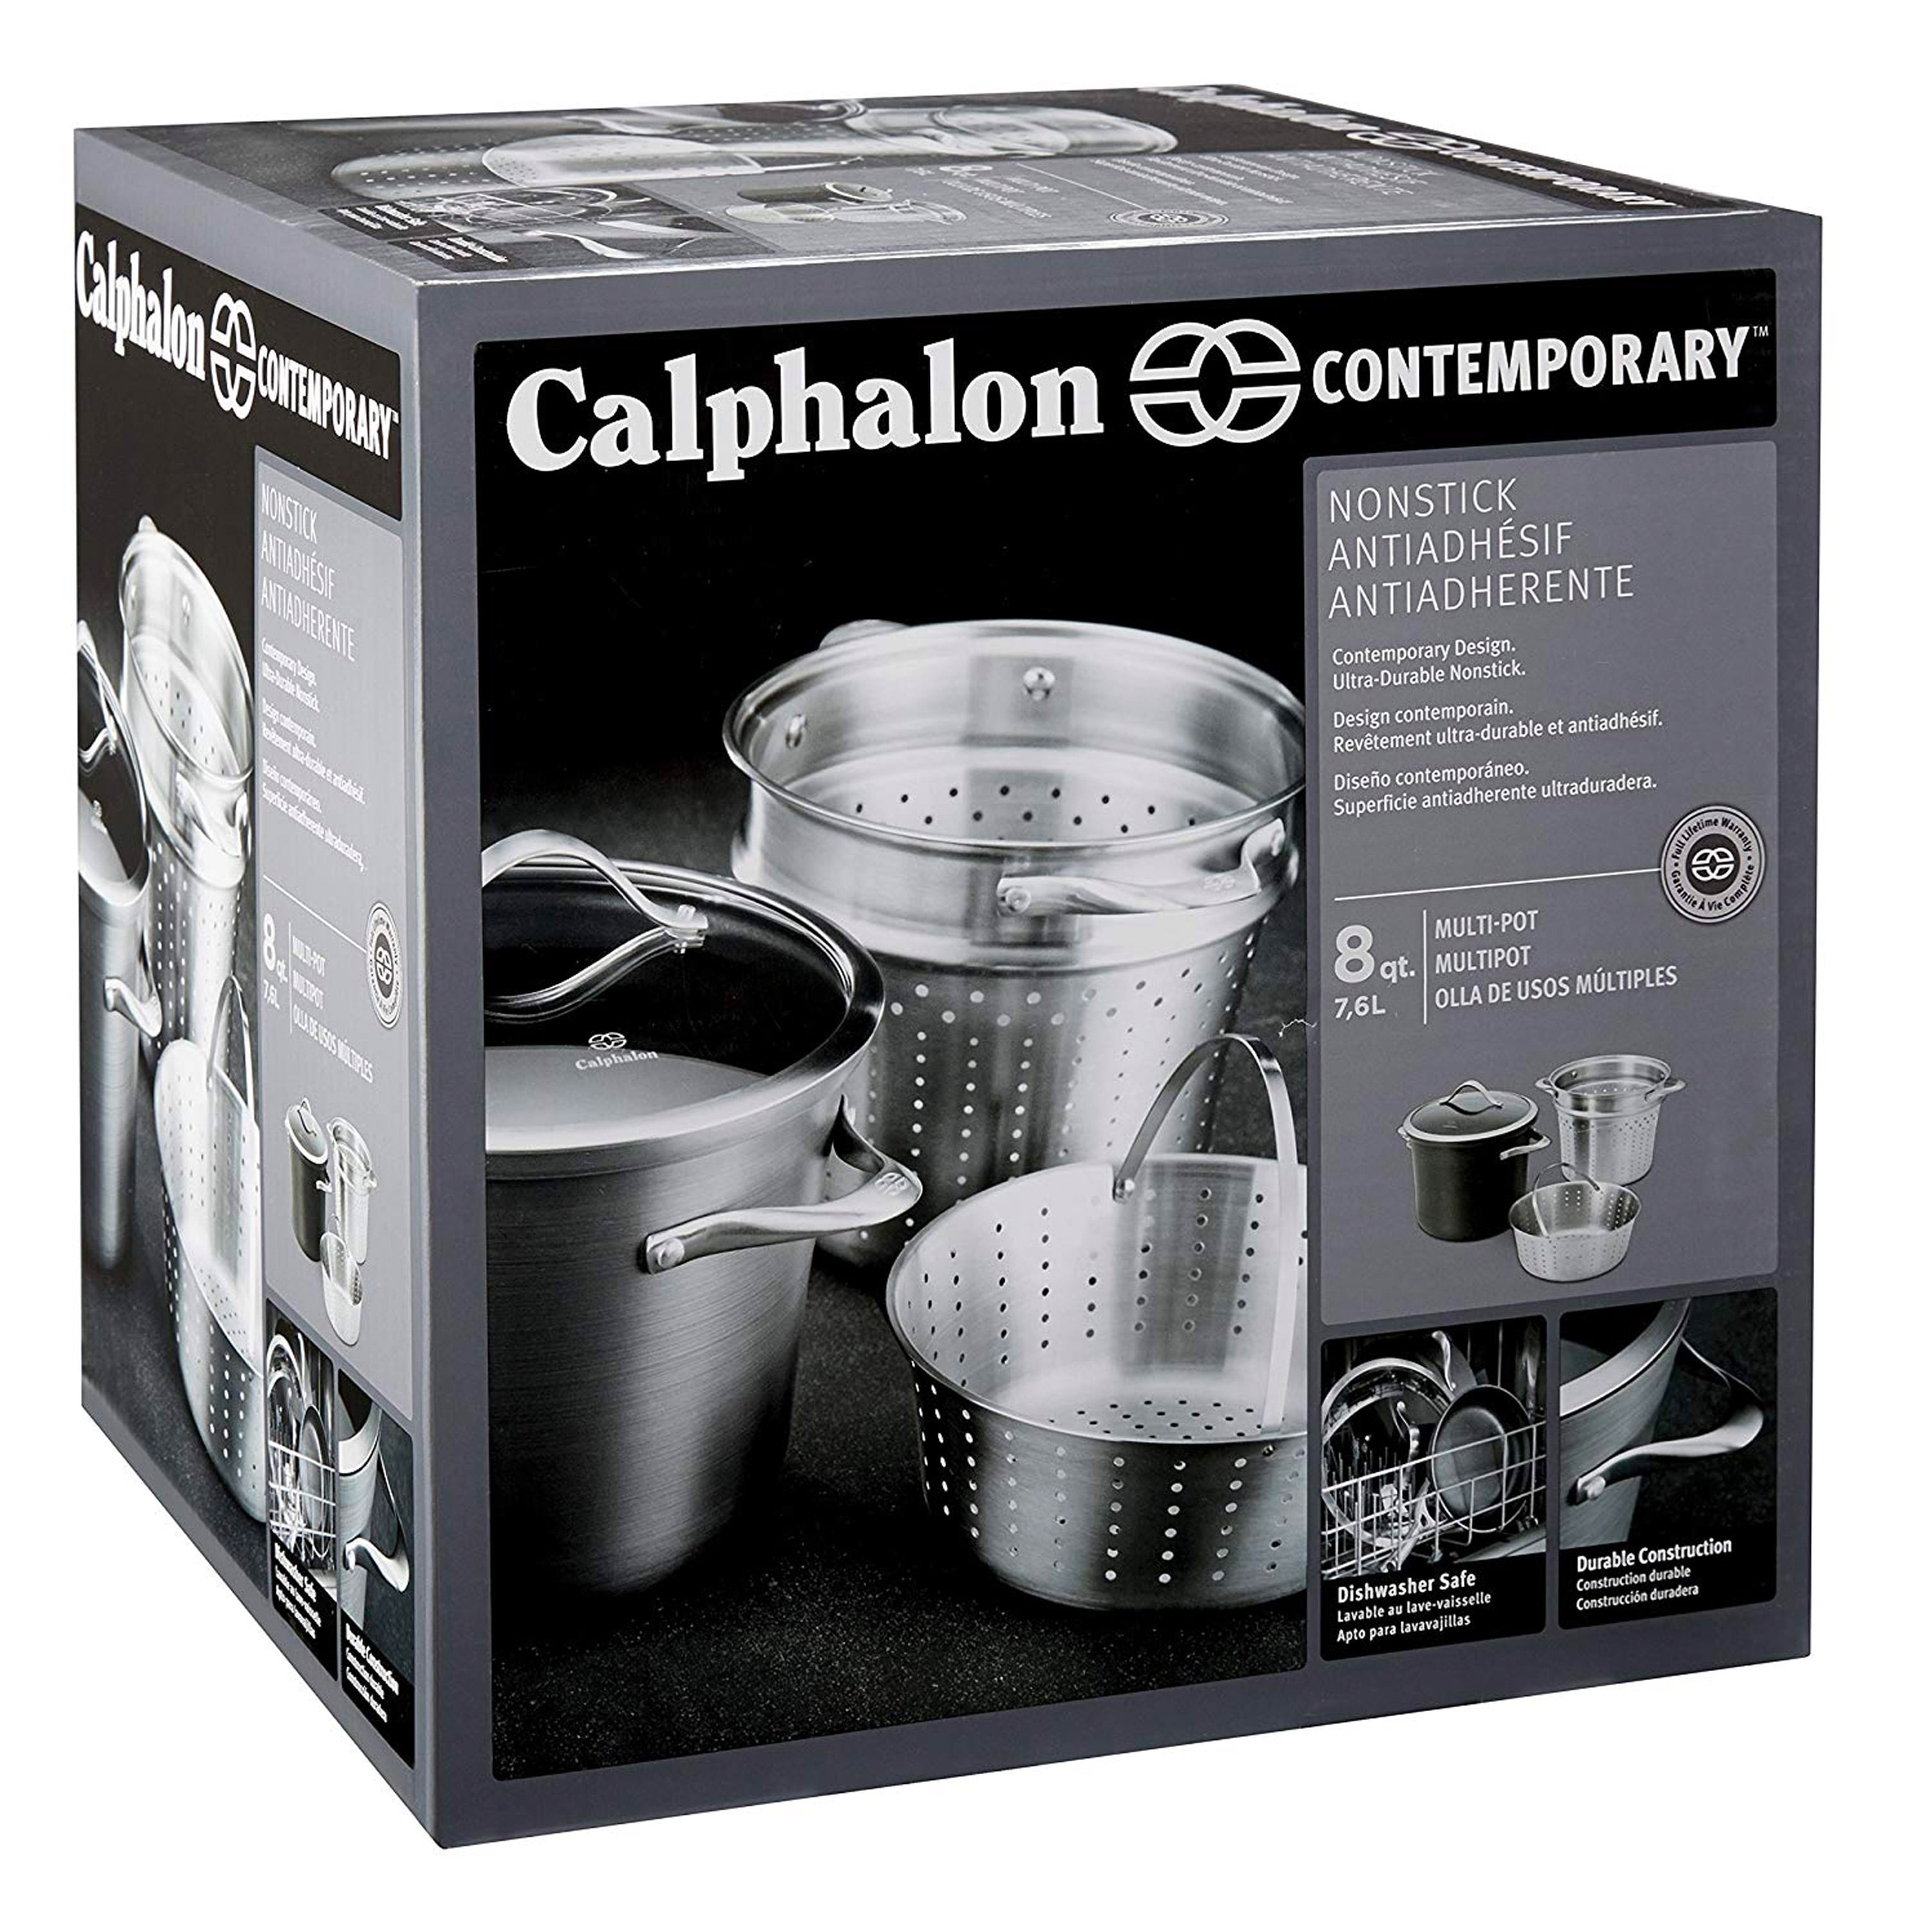 Calphalon Contemporary Nonstick 8-Quart Stock Pot